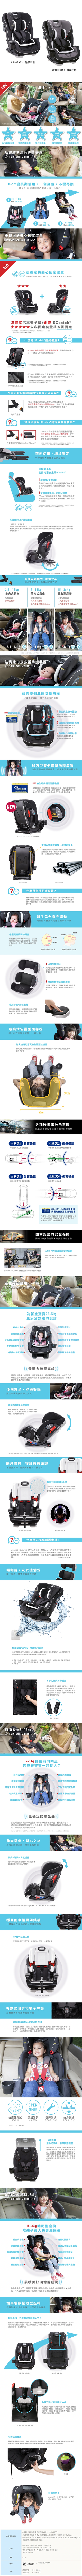 GRACO-SLIMFIT LX 0-12歲長效型嬰幼童汽車安全座椅(酷黑宇宙/銀灰巨岩)